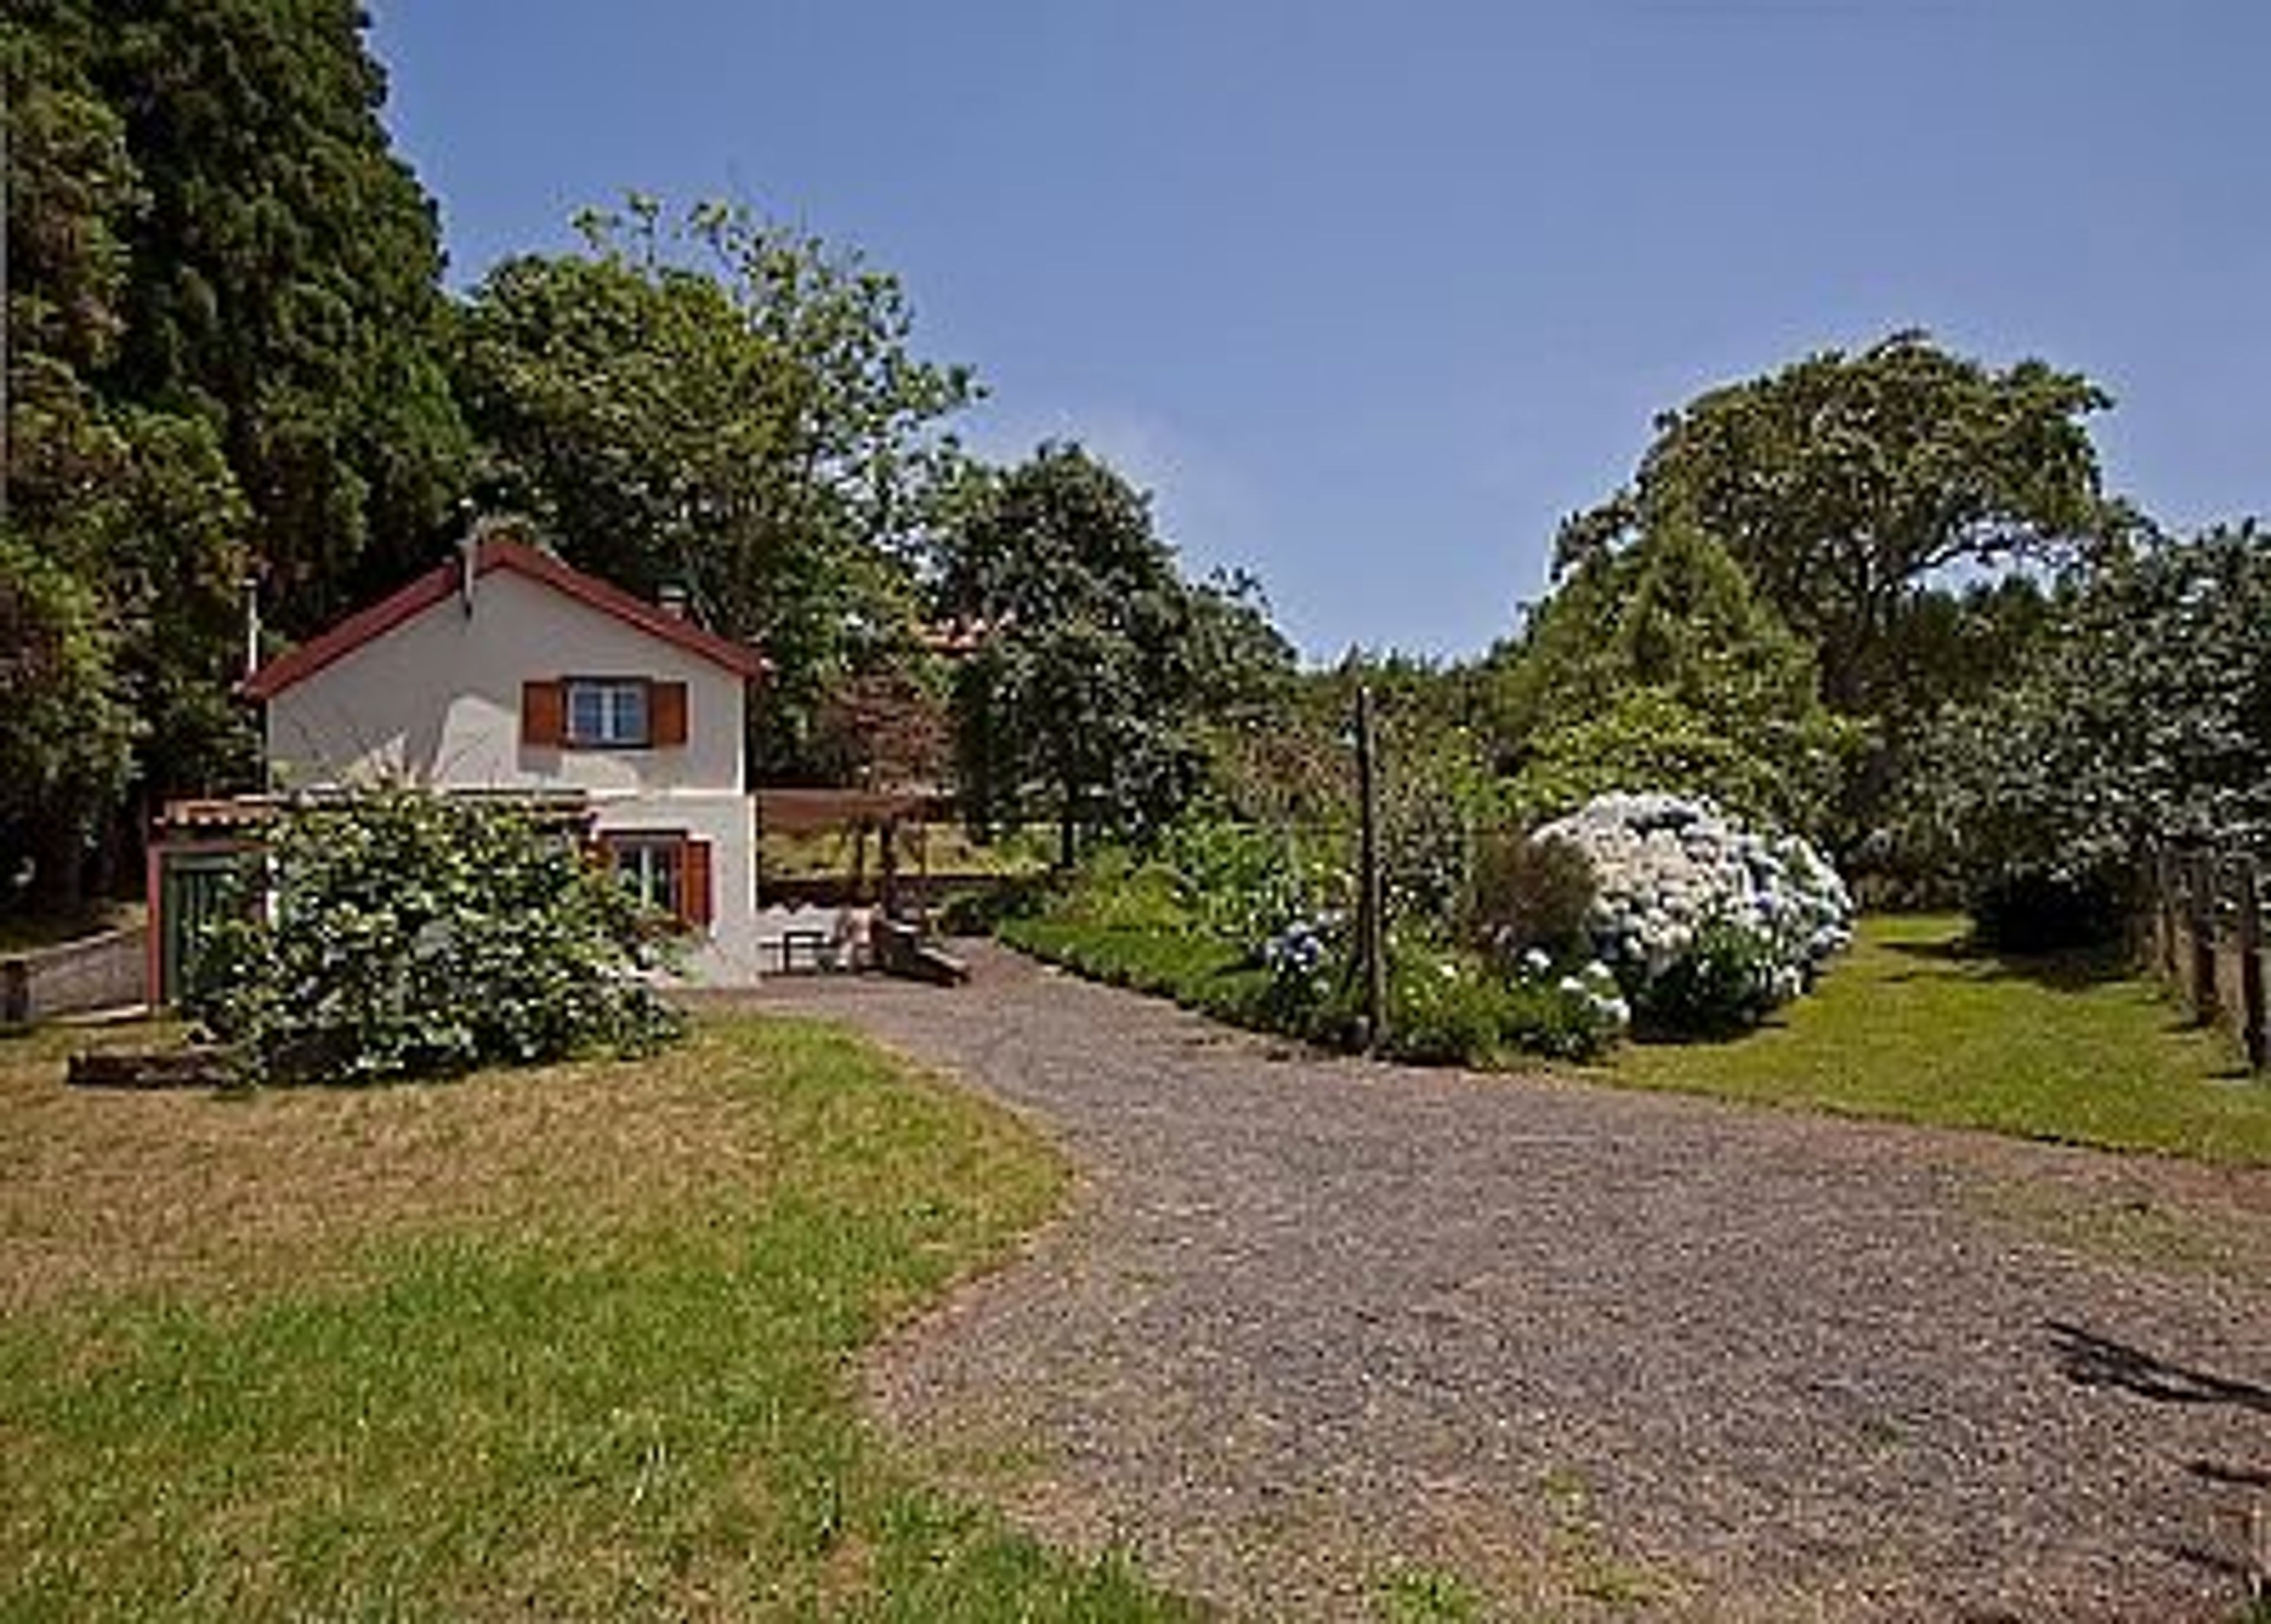 The Cottage at Quinta das Colmeias